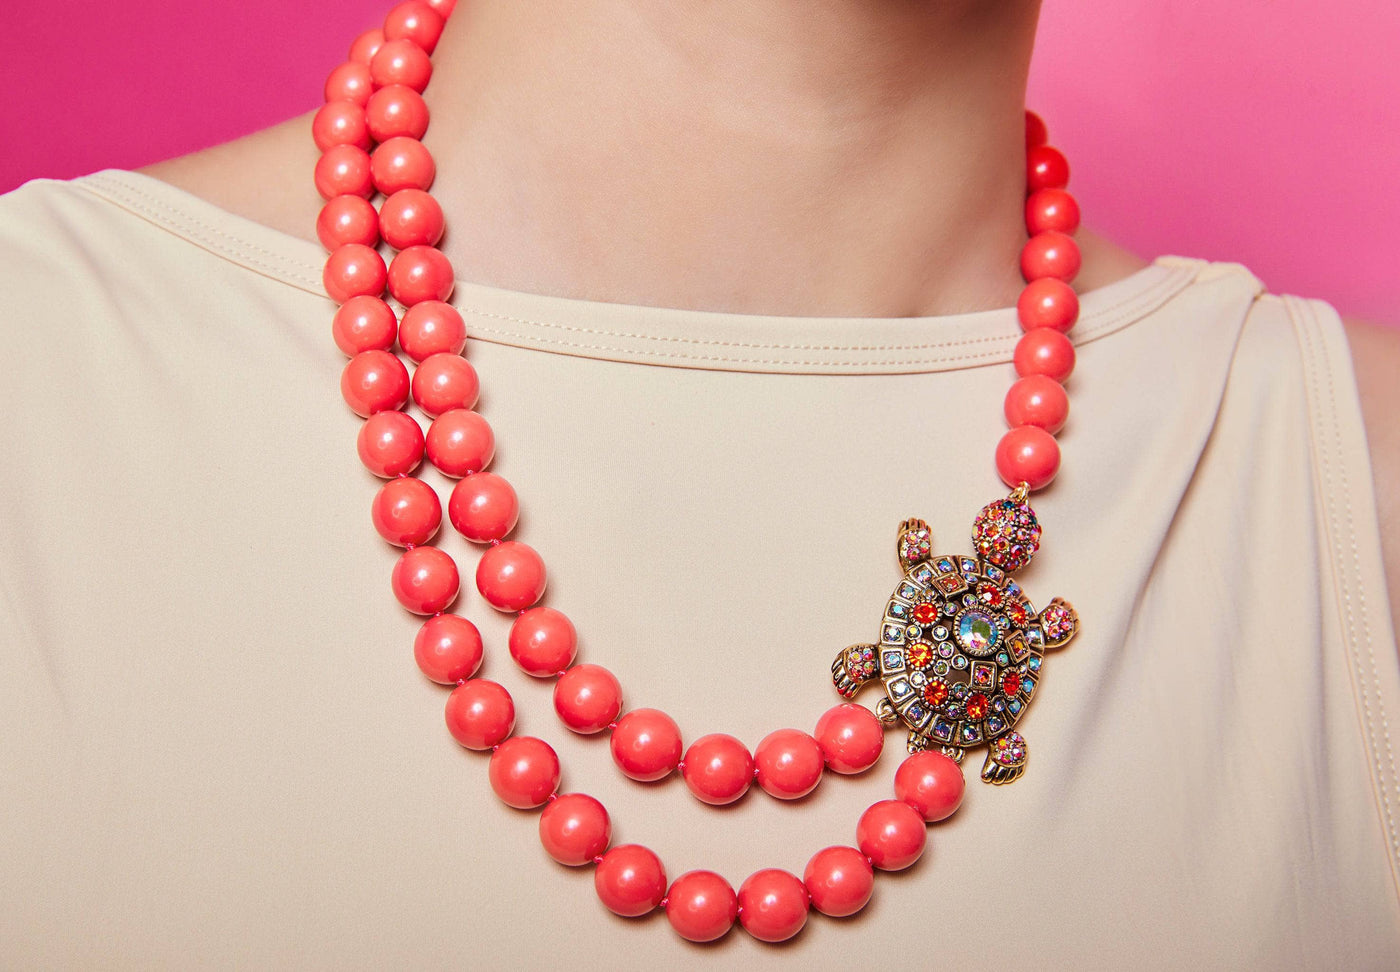 Heidi Daus®"Simply Irresistible Turtle" Beaded Crystal Turtle Necklace